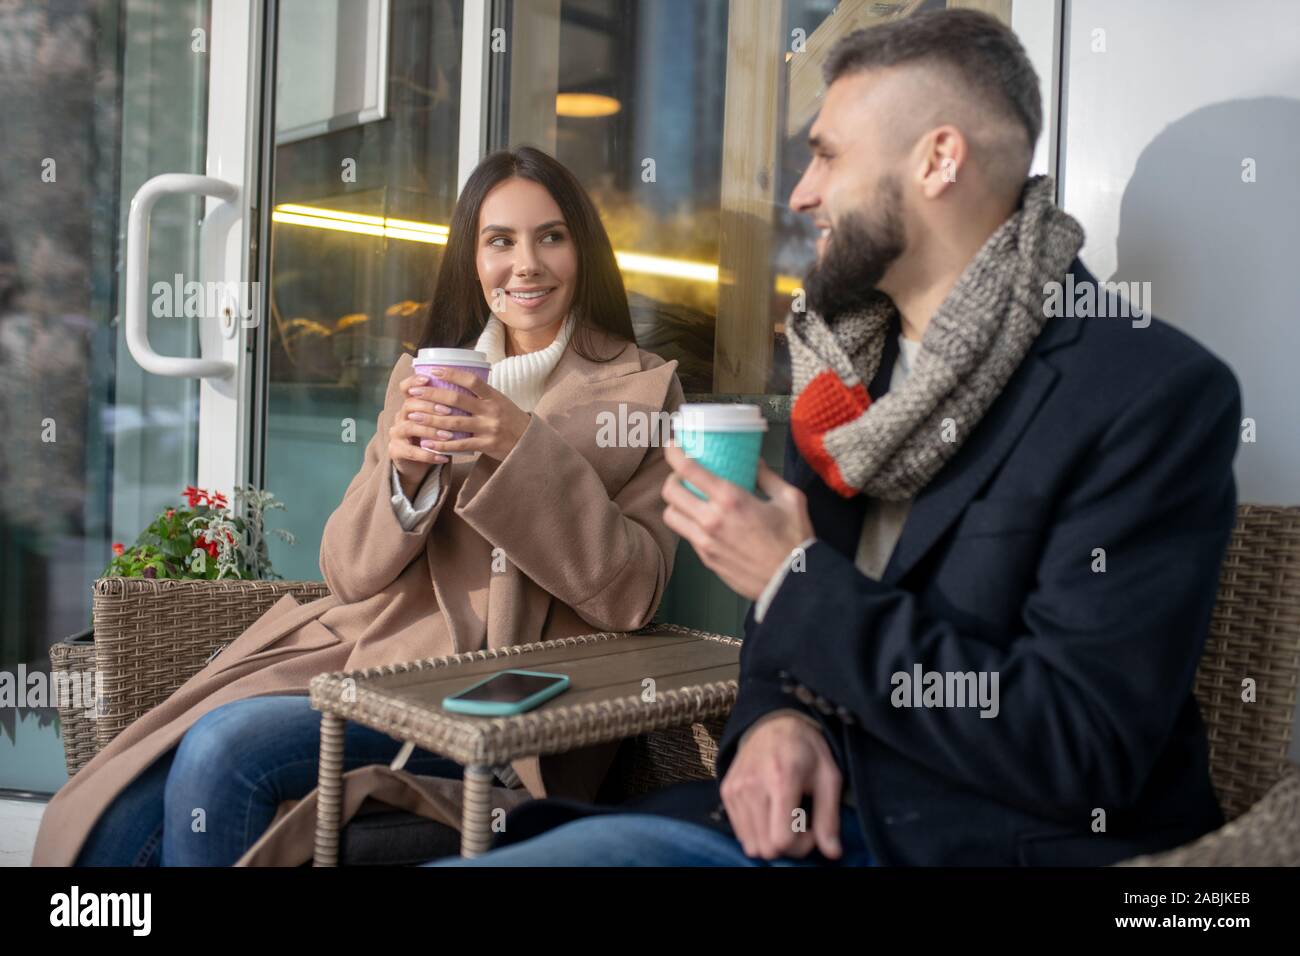 Joyful happy people having their coffee together Stock Photo